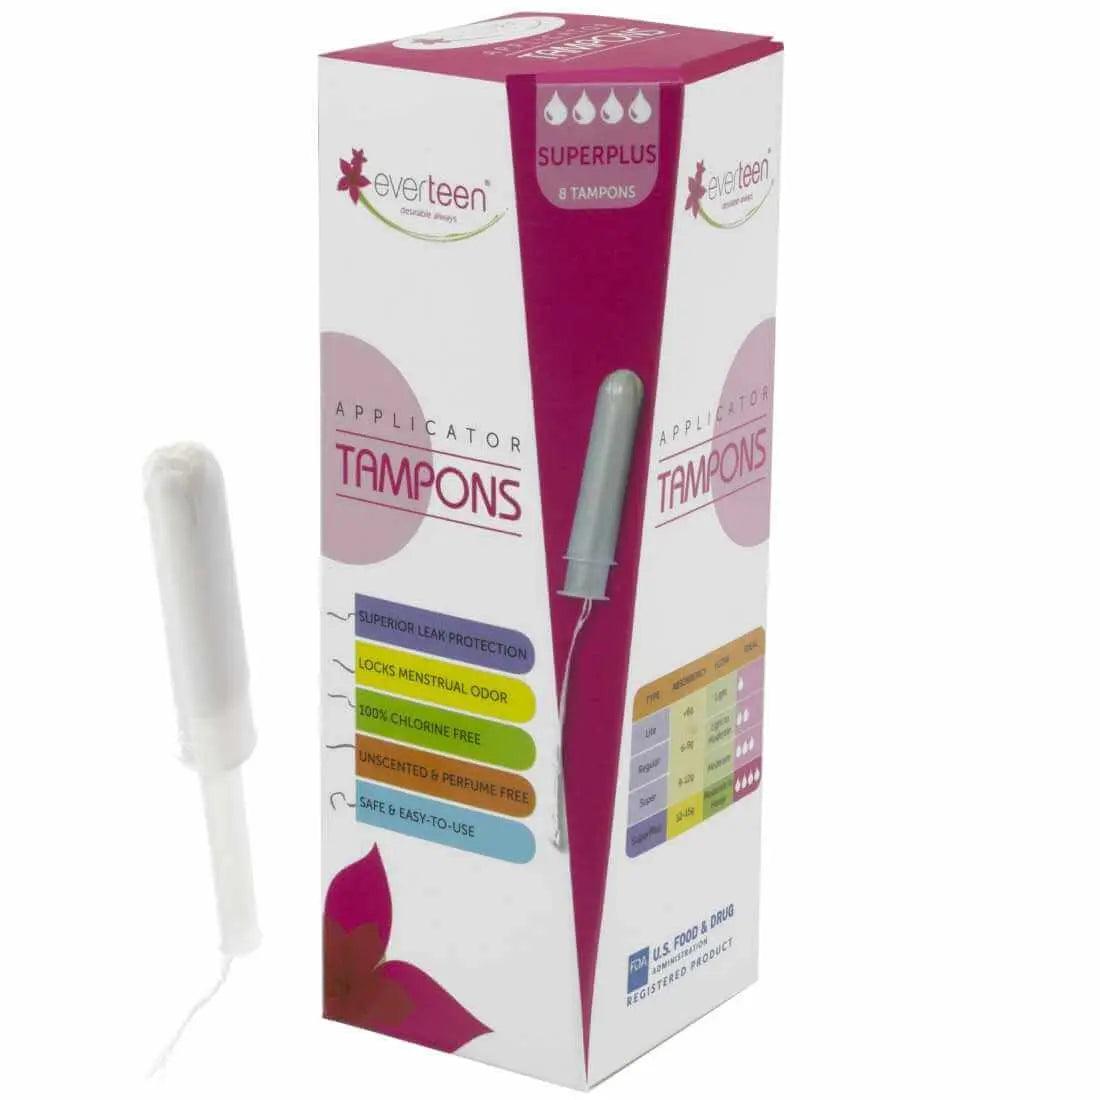 everteen Applicator Tampons for Menstrual Periods in Women 8906116280102